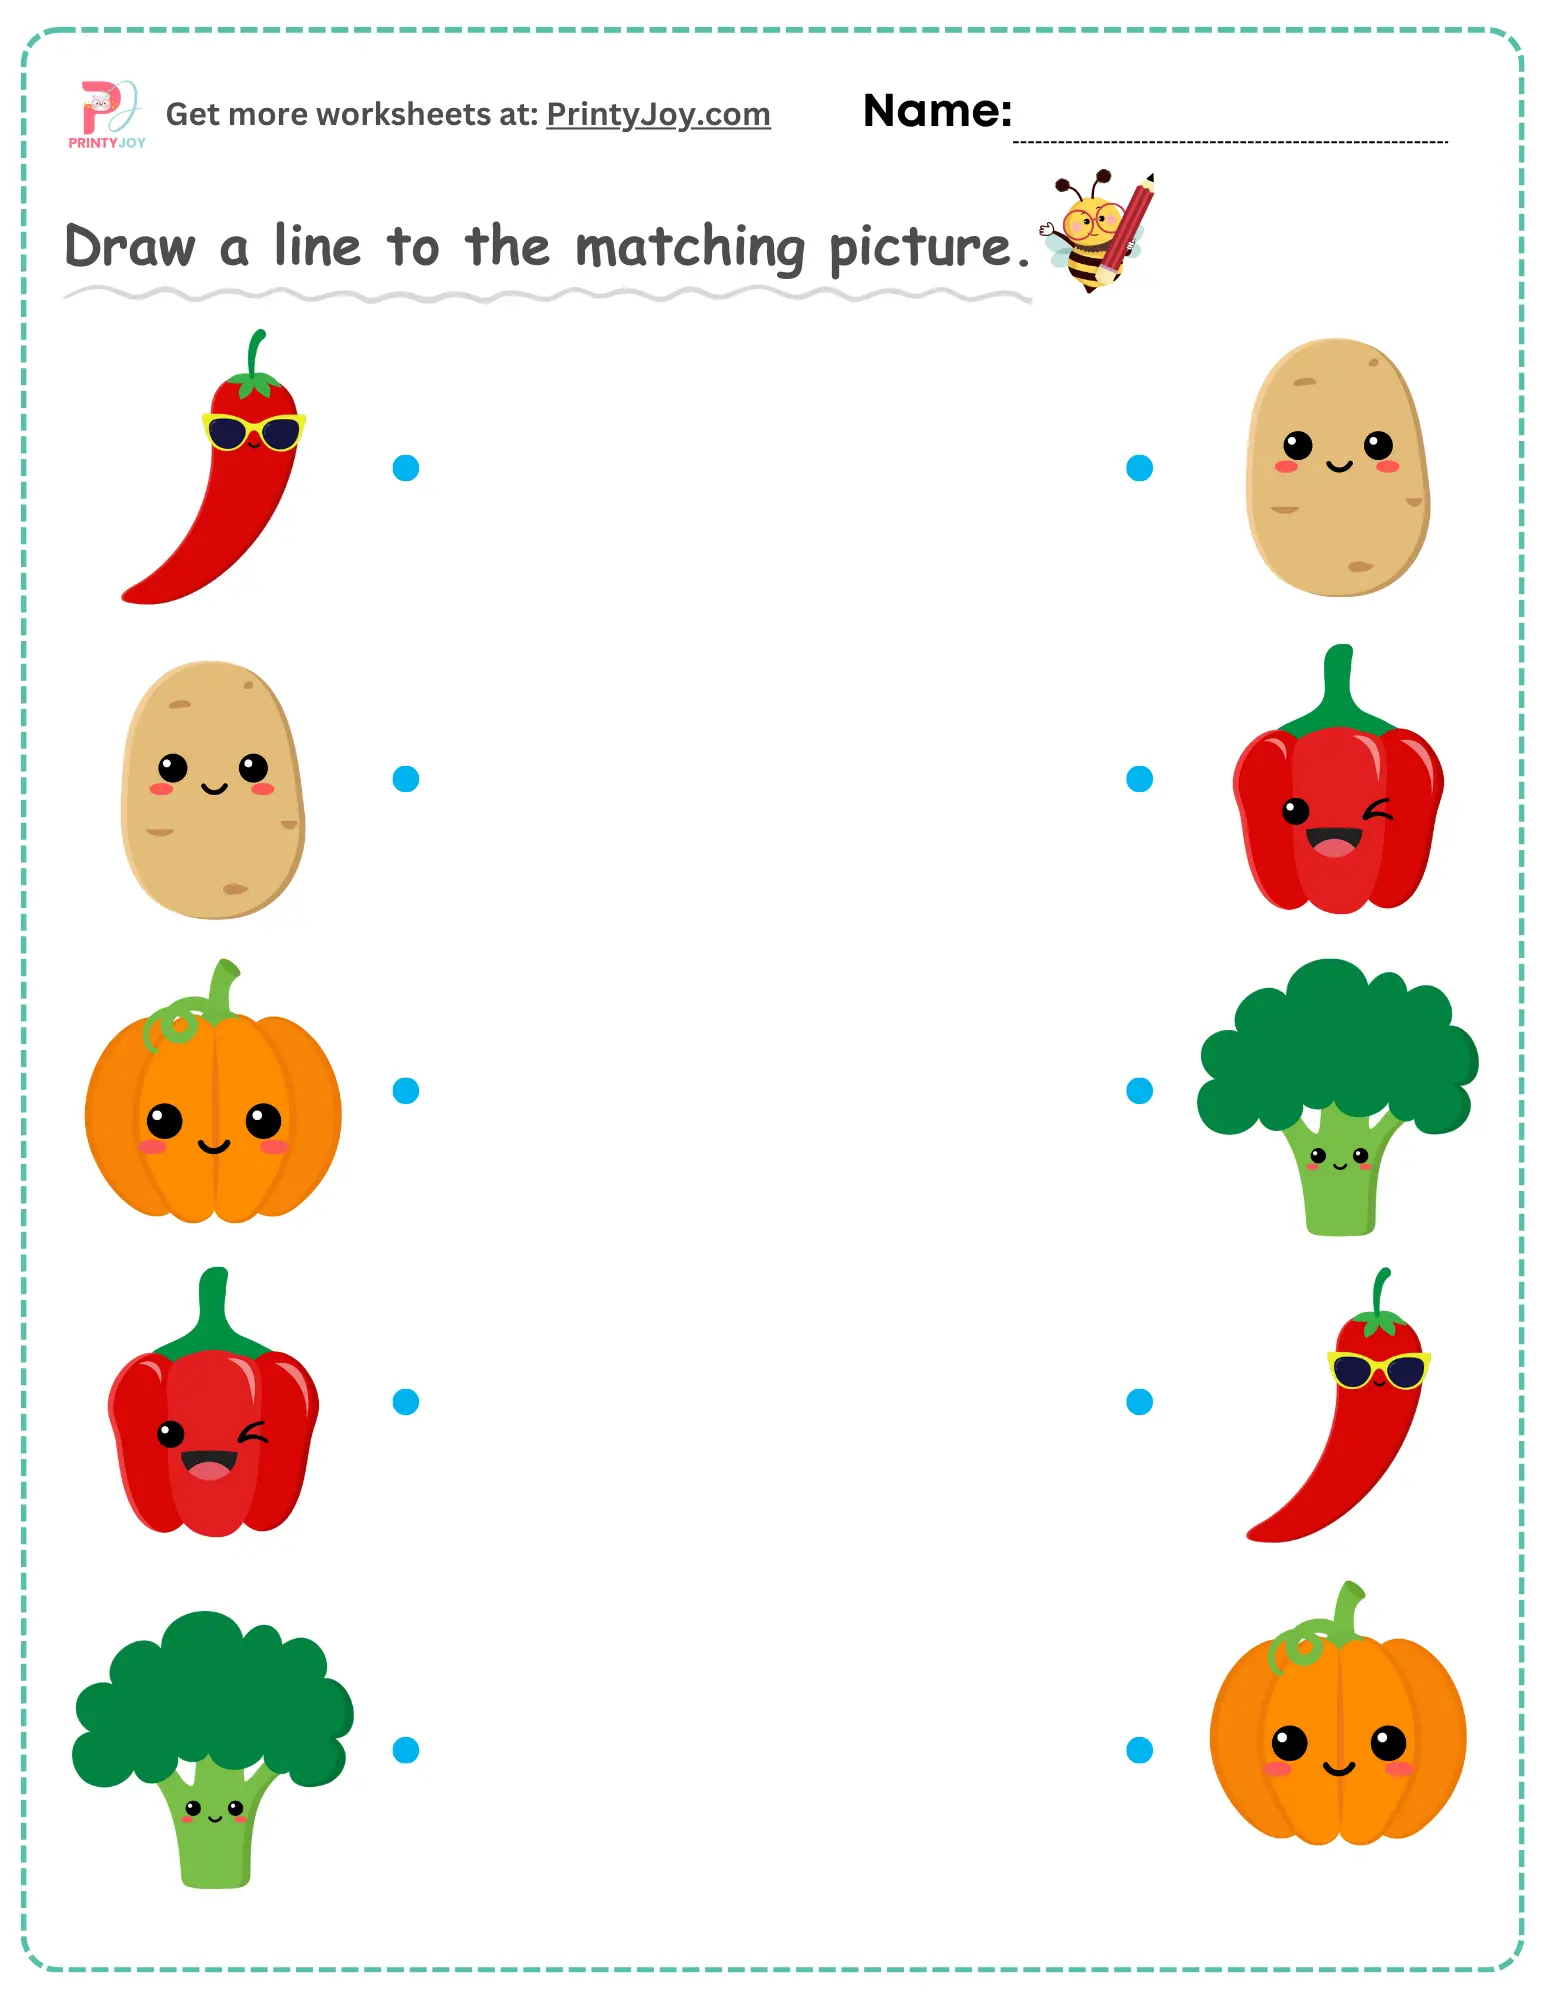 Free Printable Matching Worksheets, vegetables matching worksheets